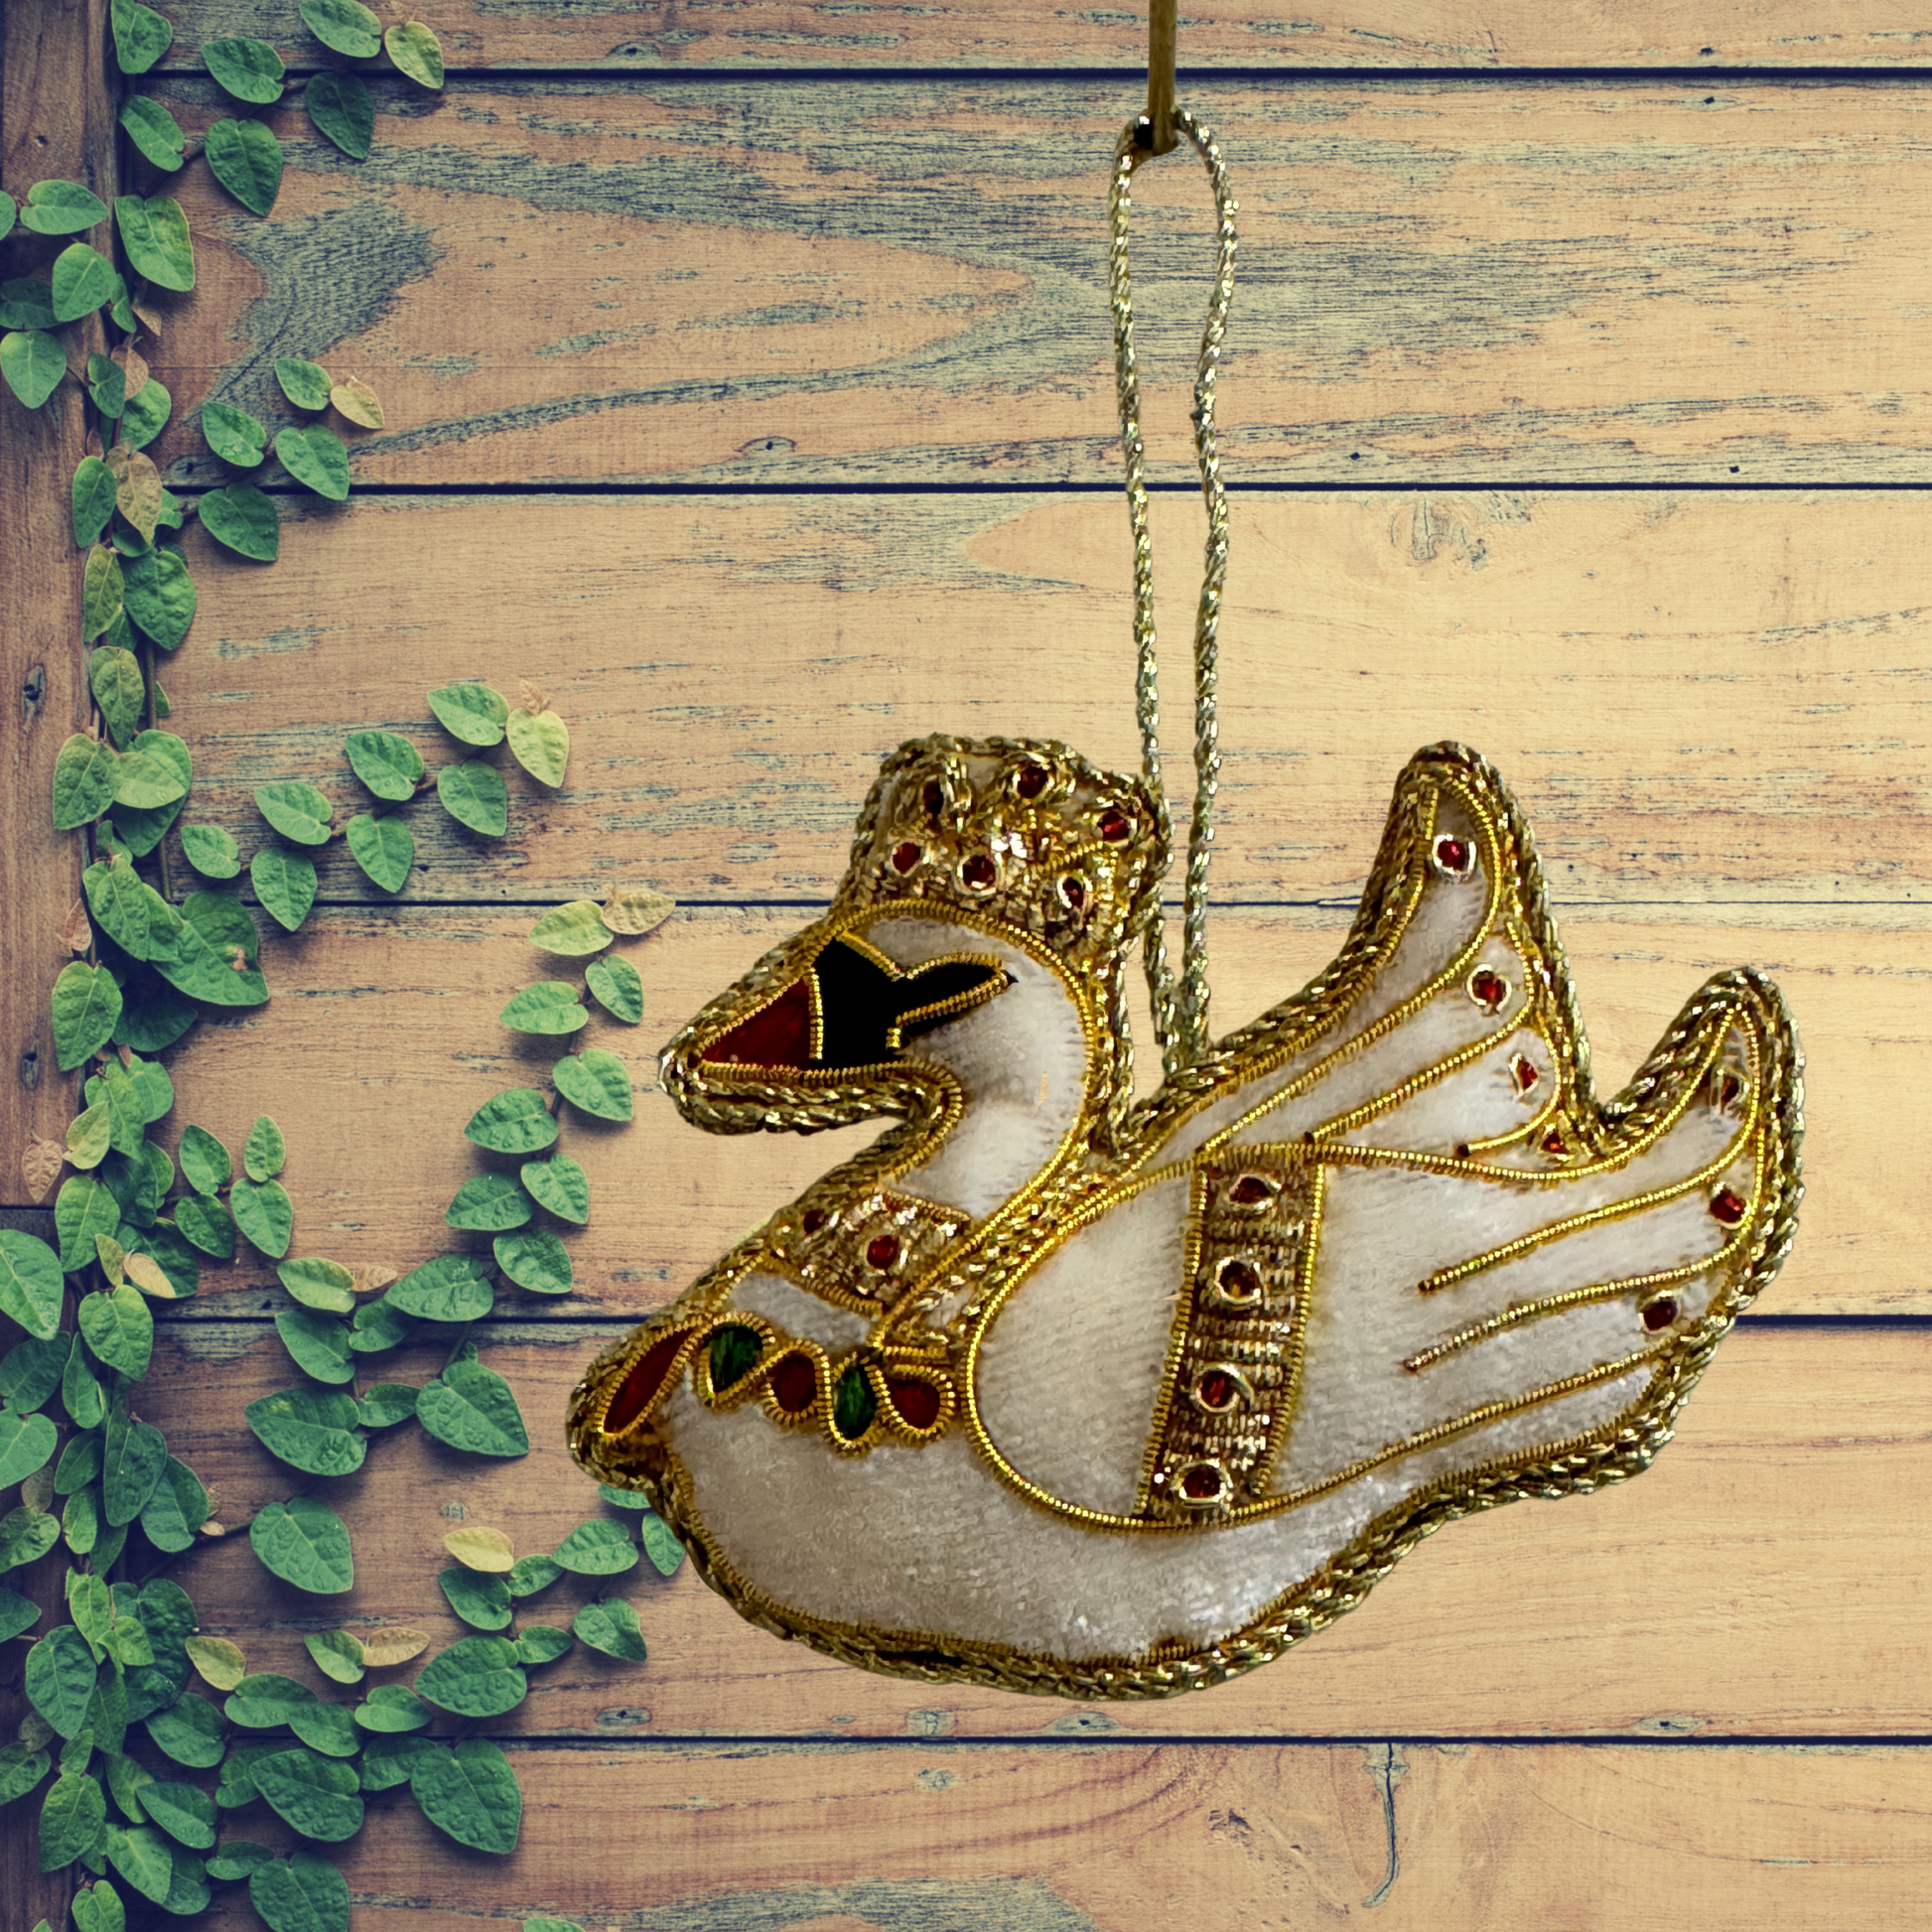 Swan Christmas Ornament with Zari Embroidery - Tortuna